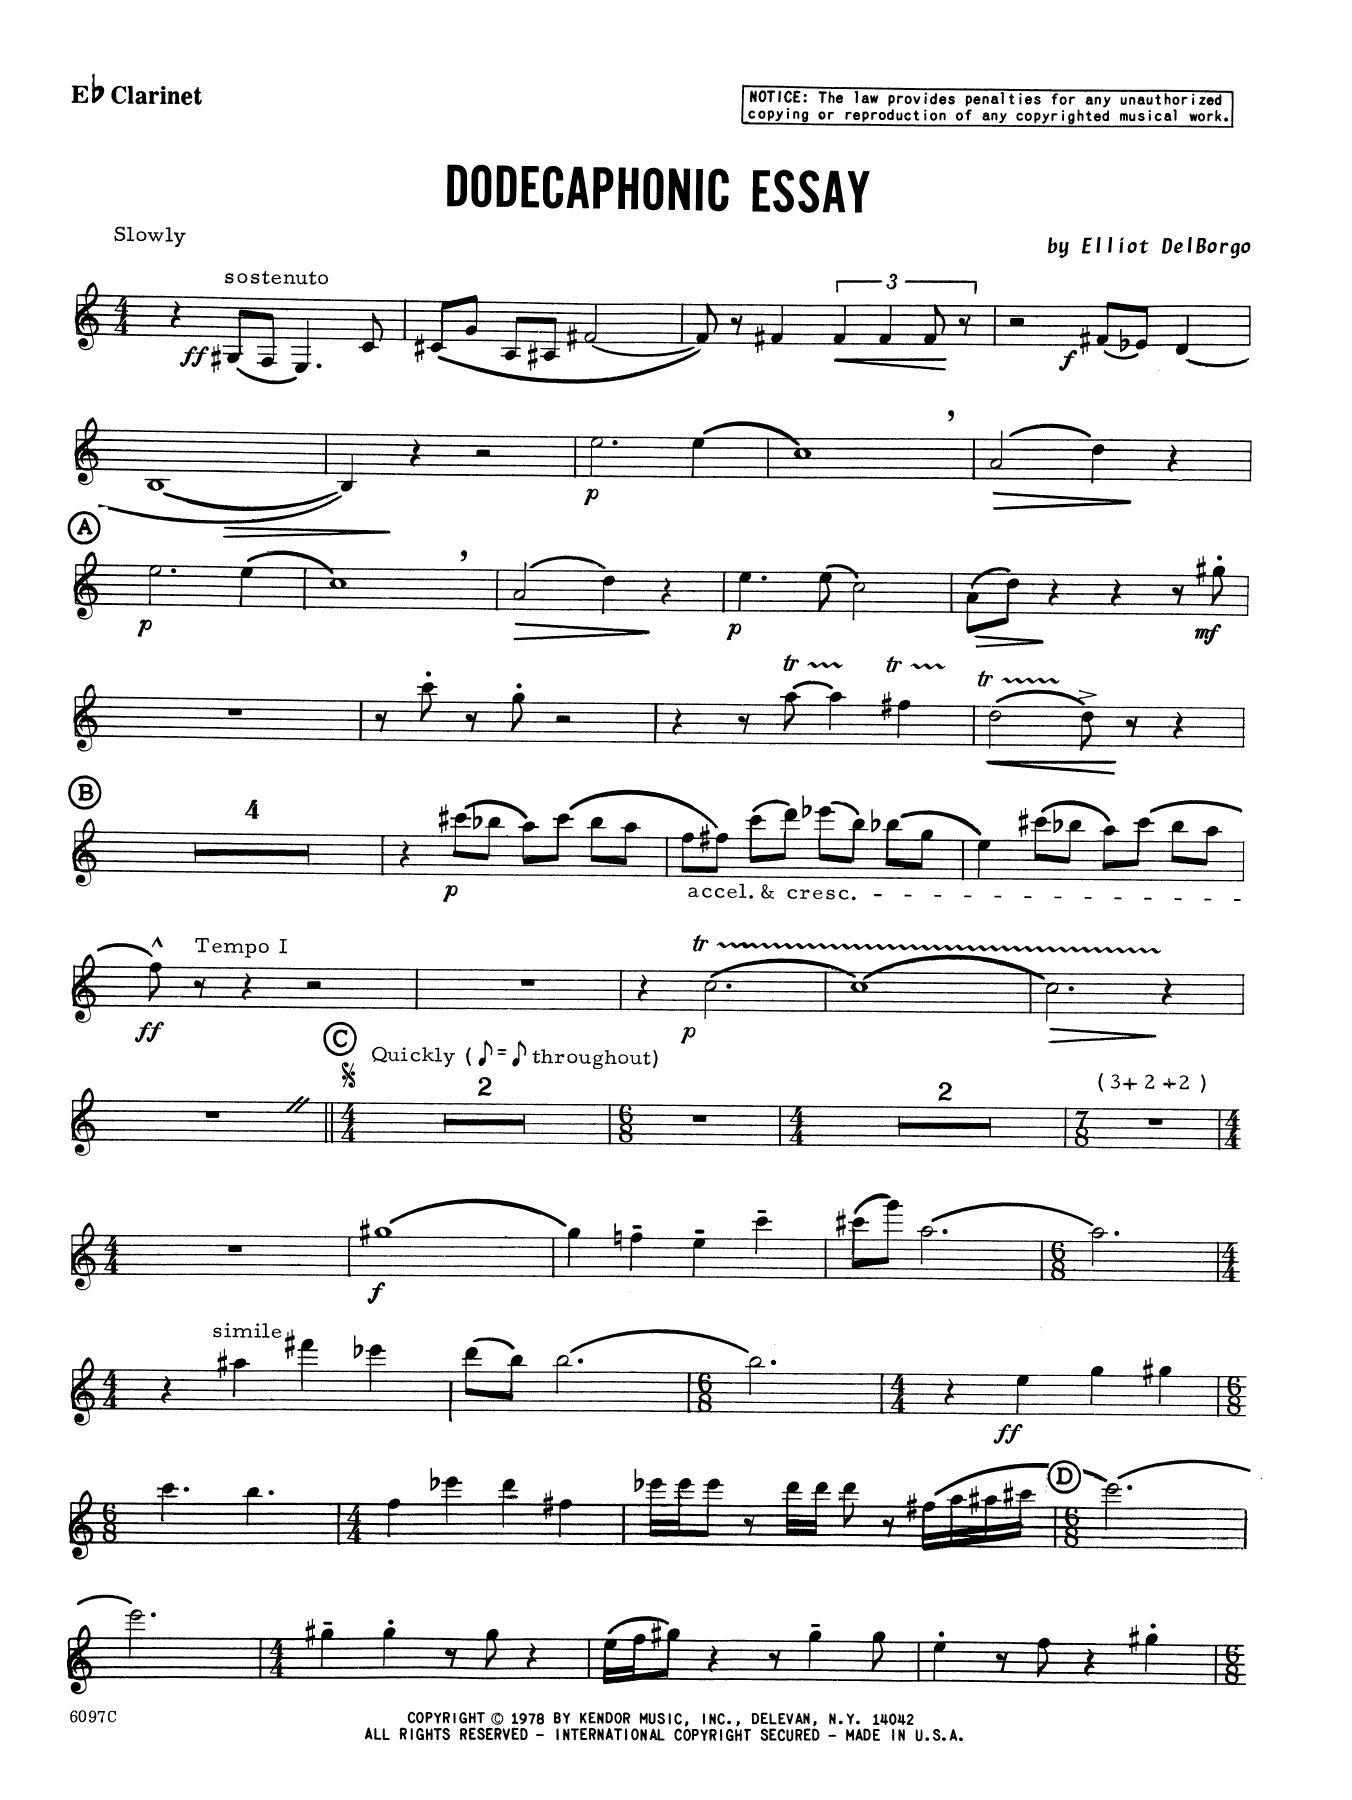 Download Elliot A. Del Borgo Dodecaphonic Essay - Eb Clarinet Sheet Music